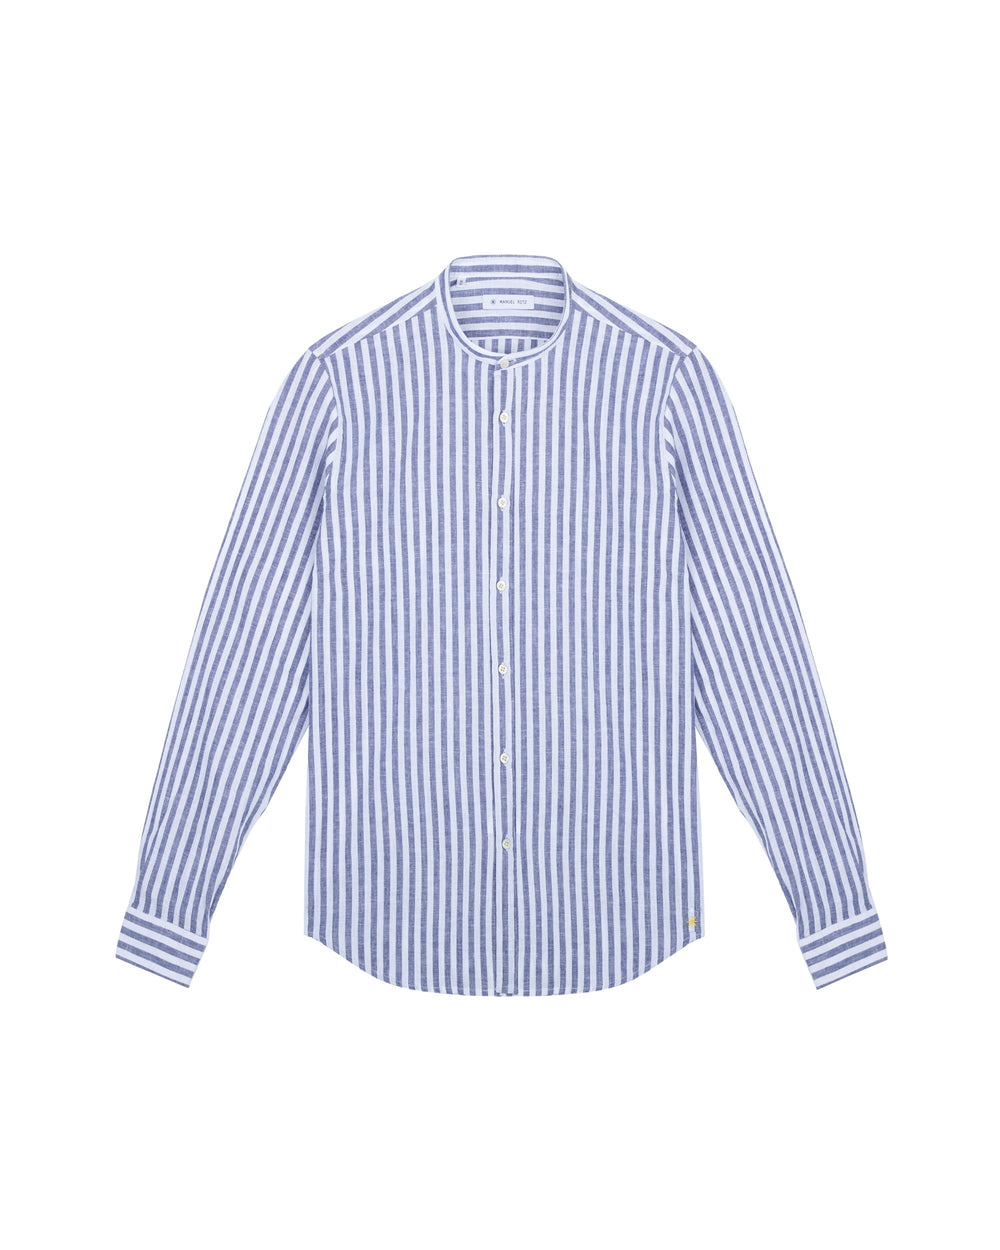 blue slim regimental shirt in cotton linen blend